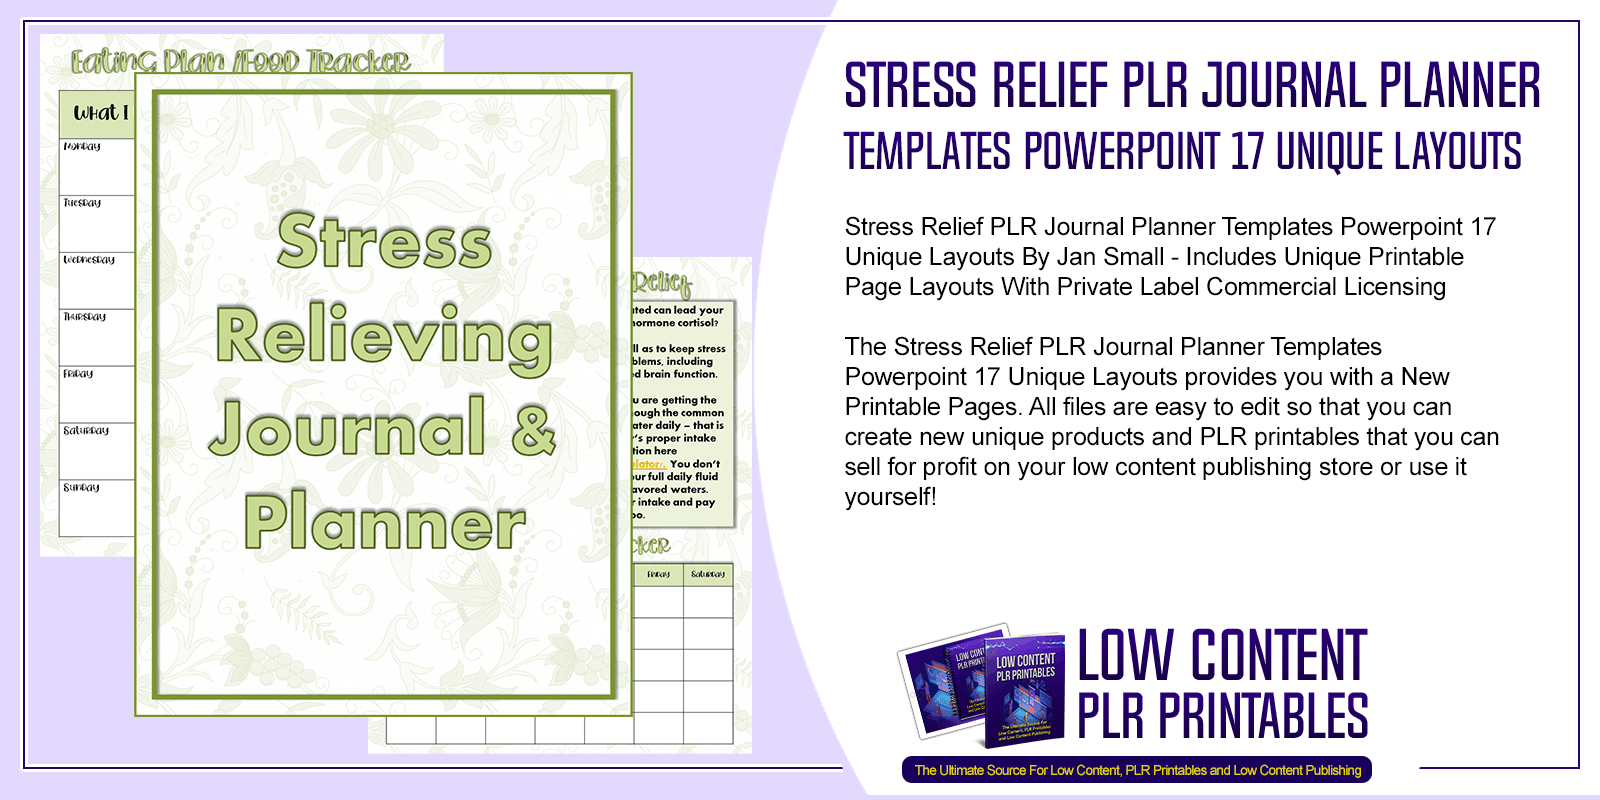 Stress Relief PLR Journal Planner Templates Powerpoint 17 Unique Layouts